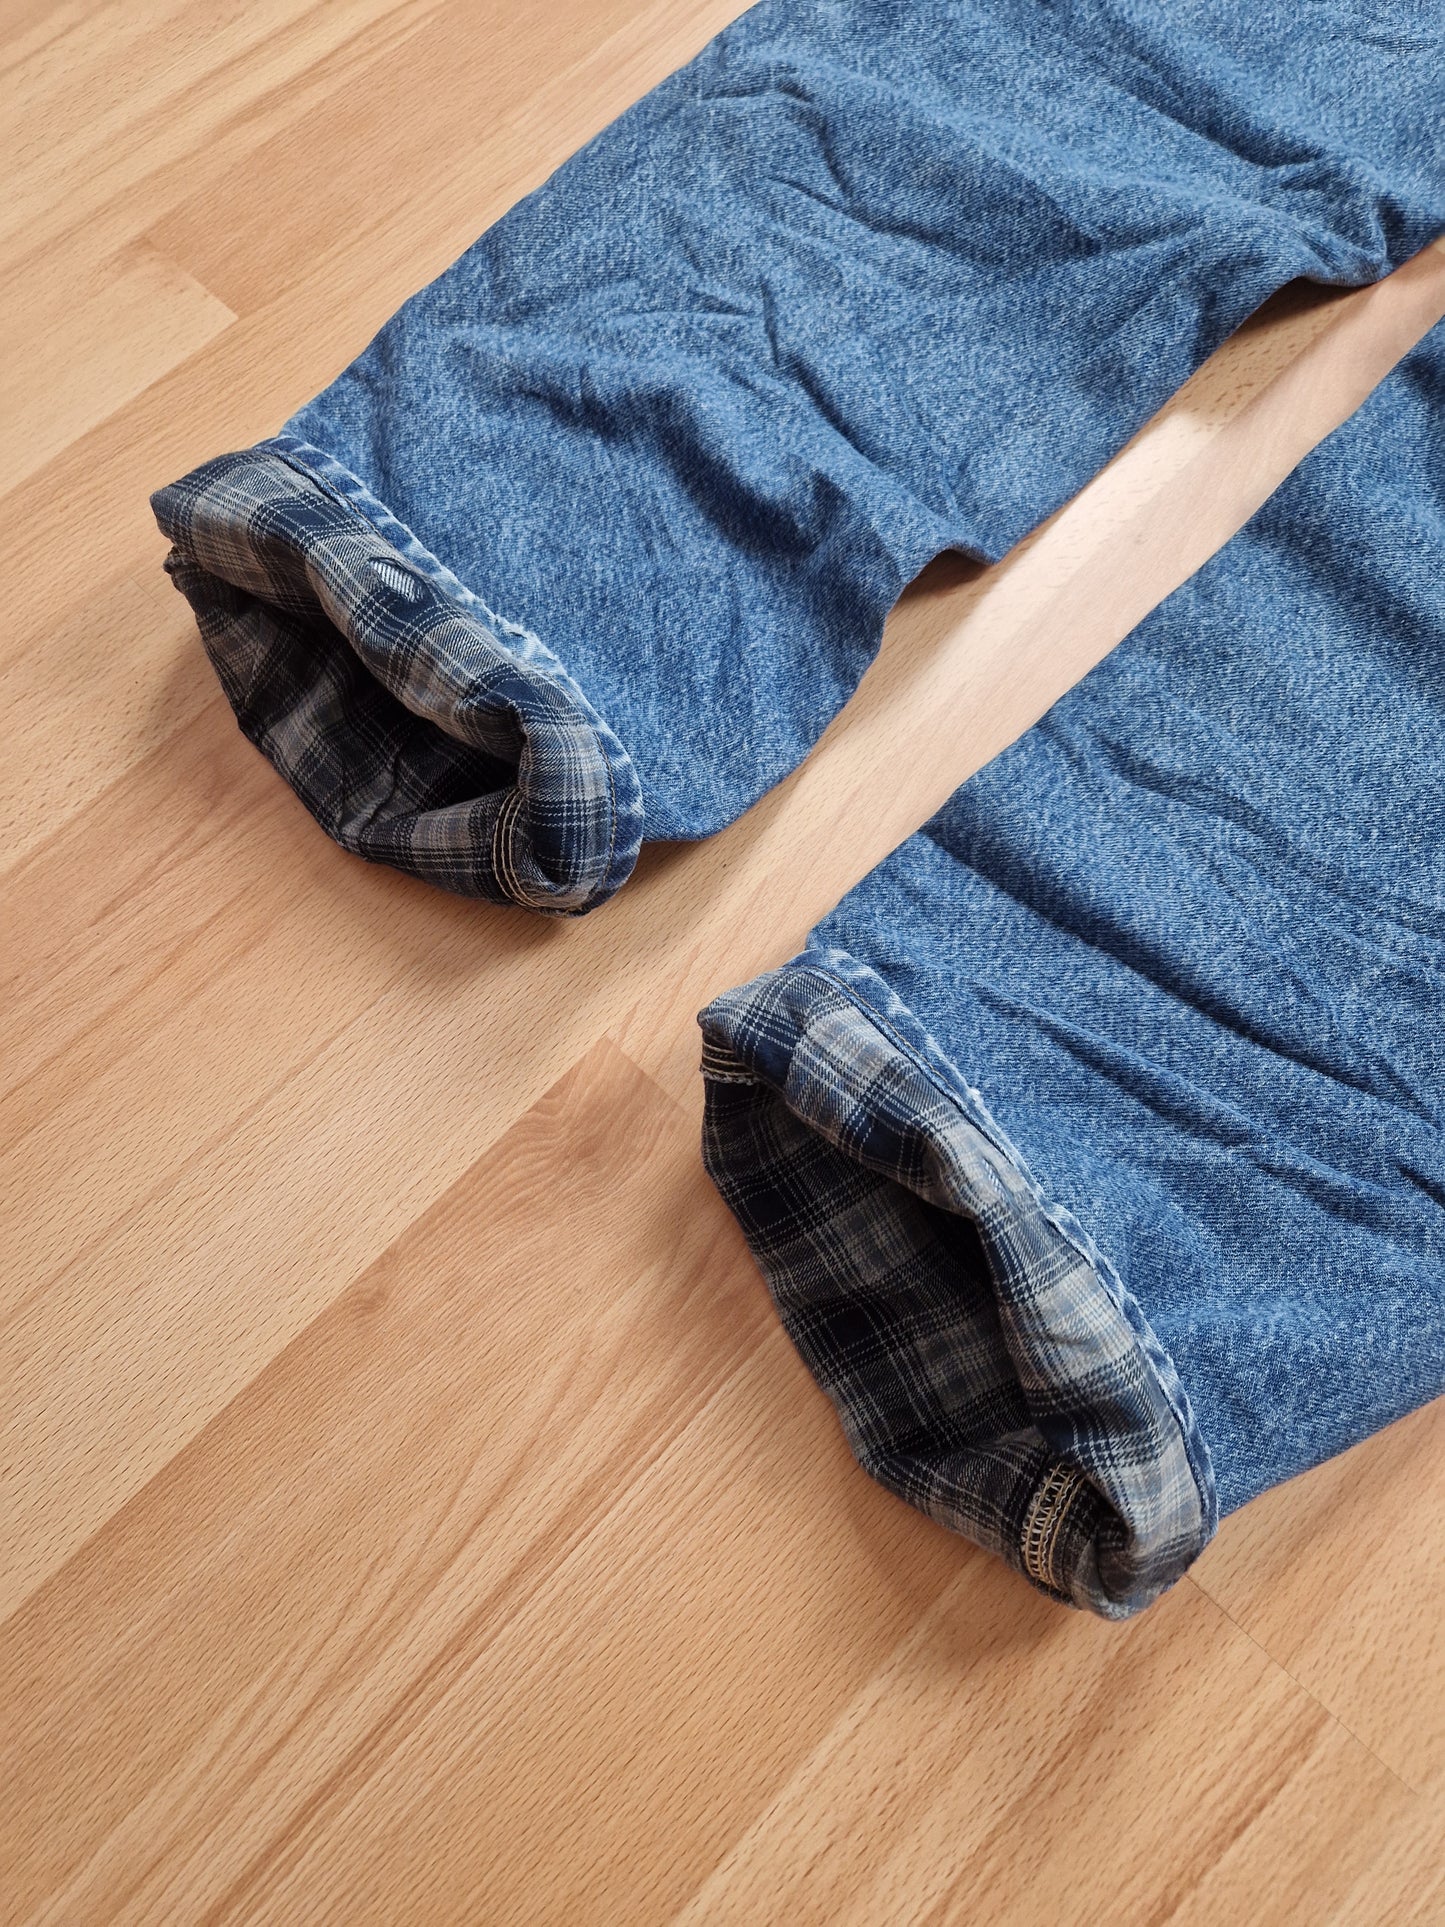 Vintage Carhartt Flannel Lined Denim Carpenter Pants (34x34)